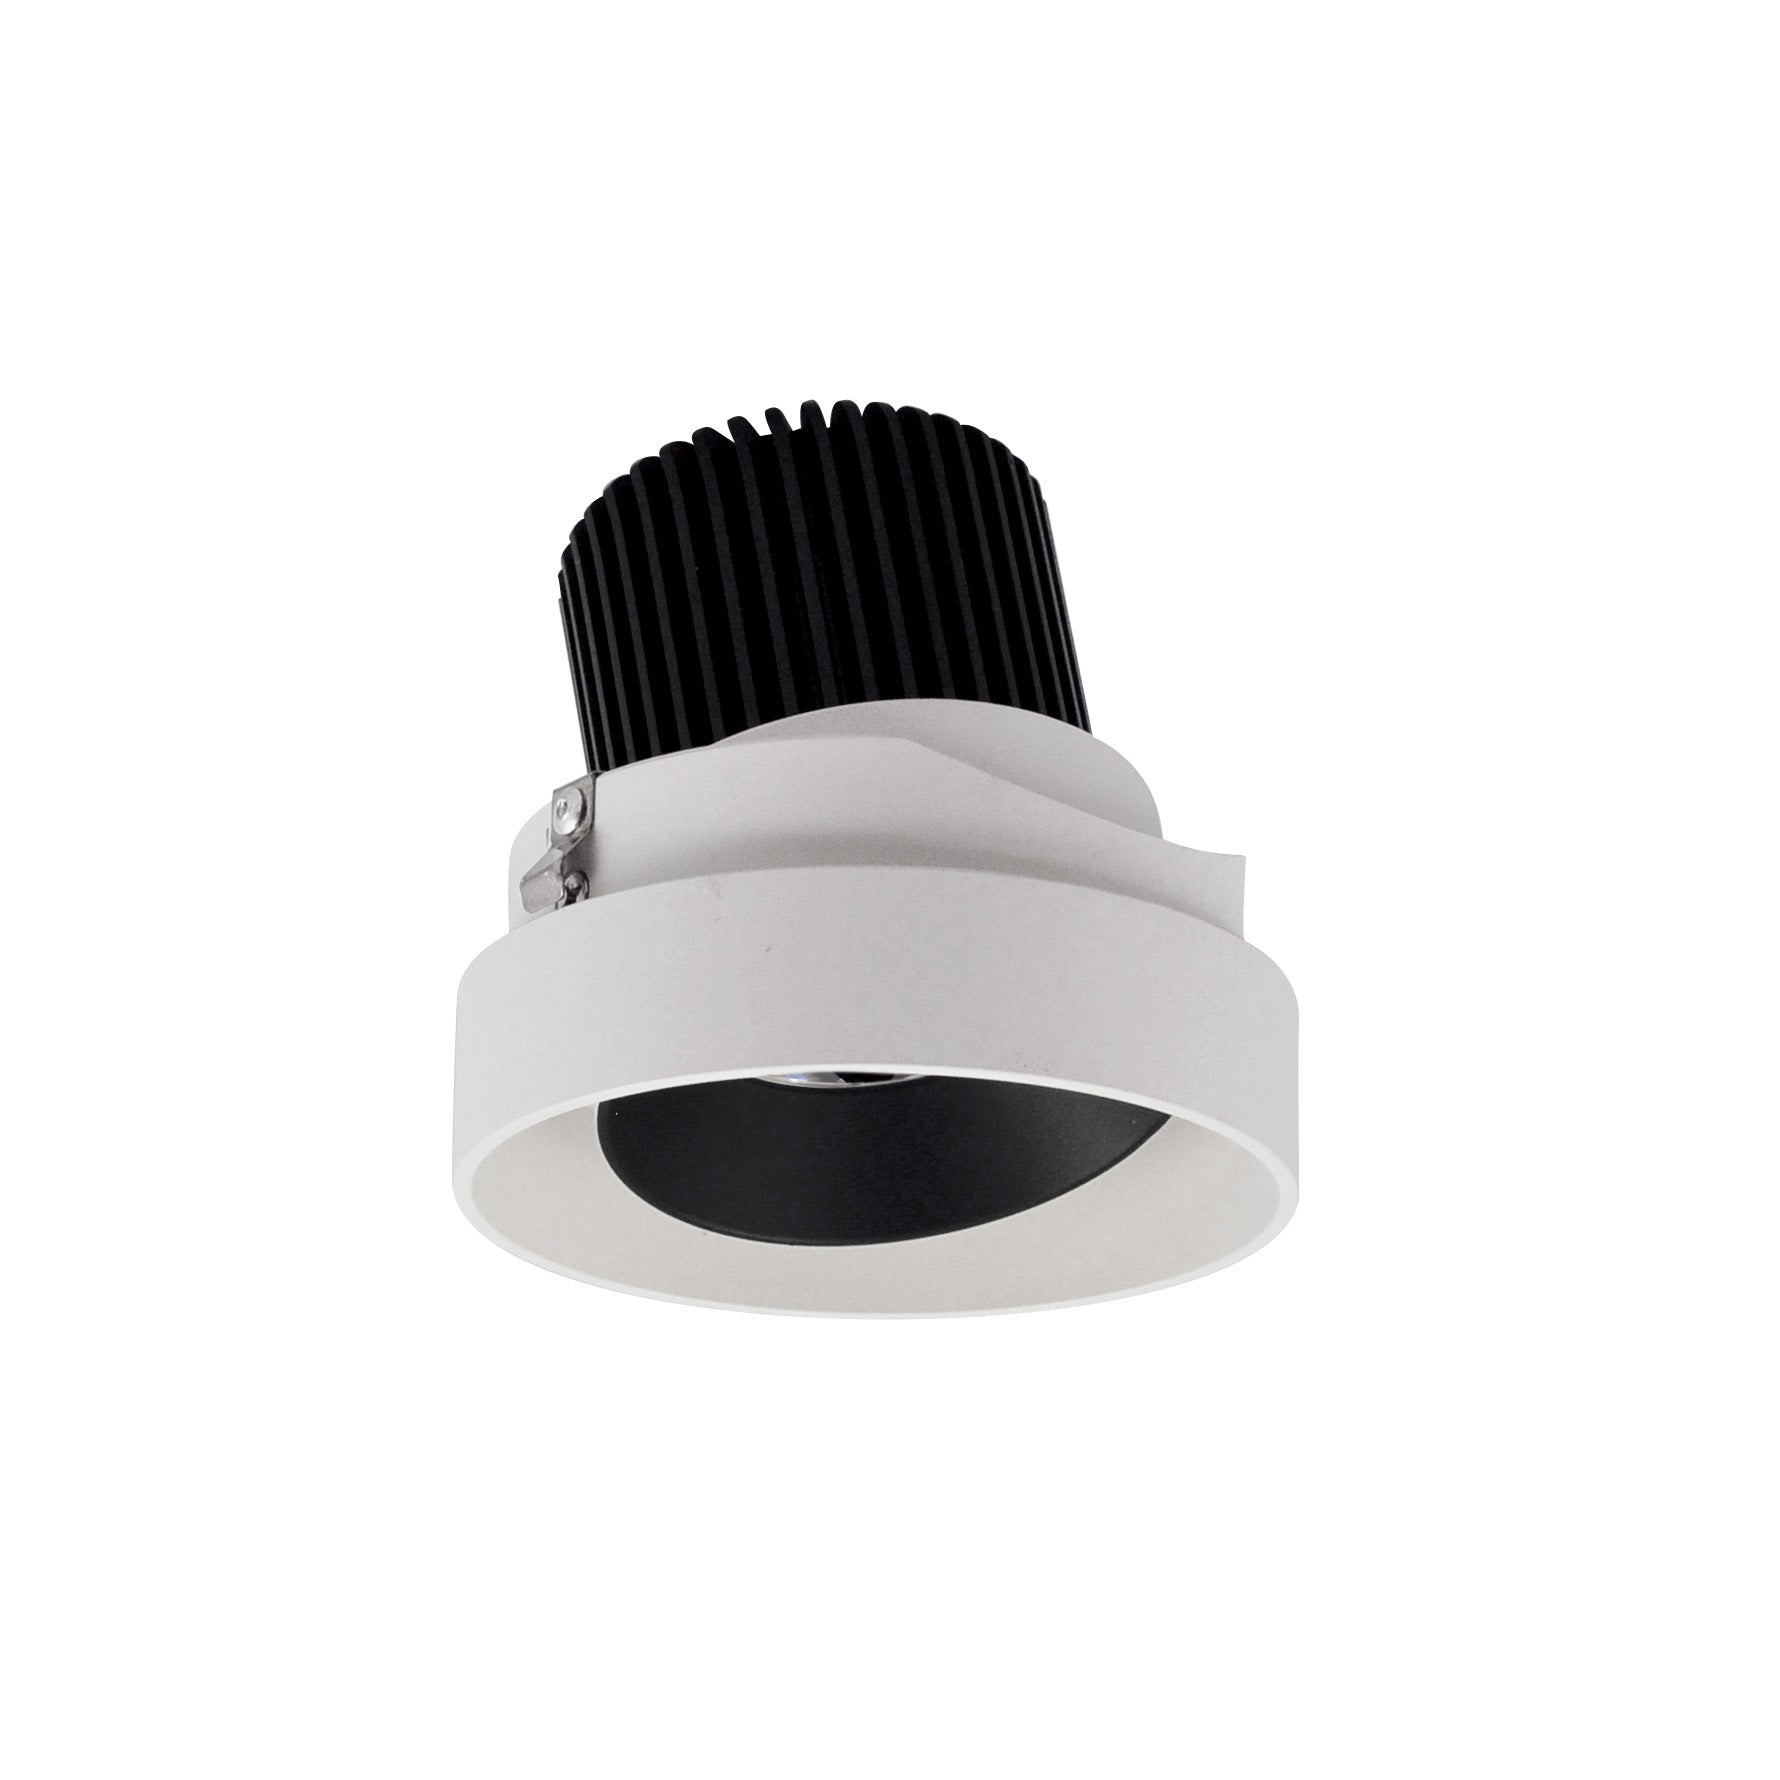 Nora Lighting NIO-4RTLA30QBW 4" Iolite LED Round Trimless Adjustable, 10-Degree Optic, 800lm / 12W, 3000K - Black Adjustable / White Reflector